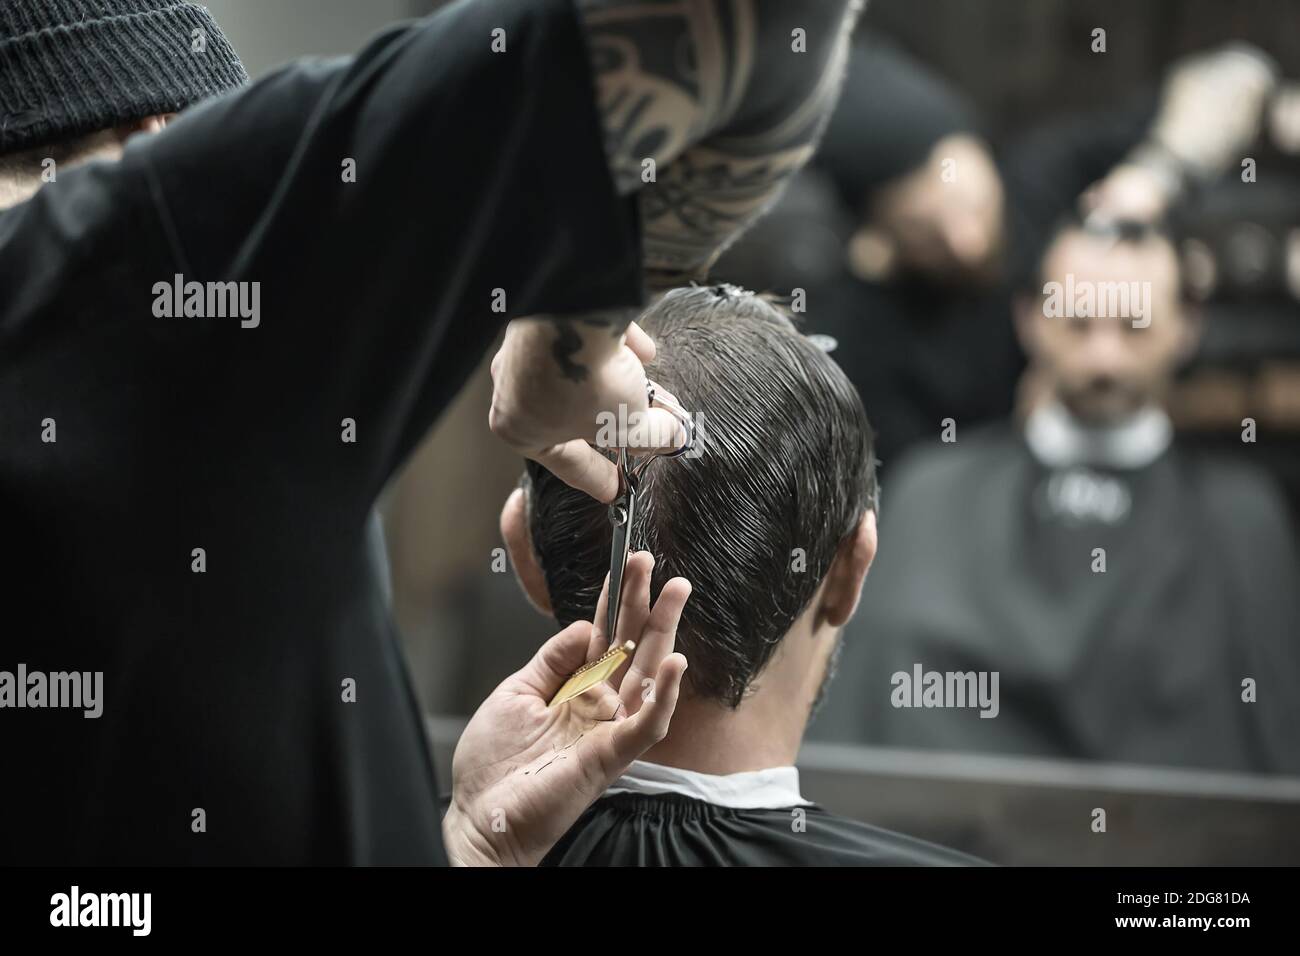 Doing haircut in barbershop Stock Photo